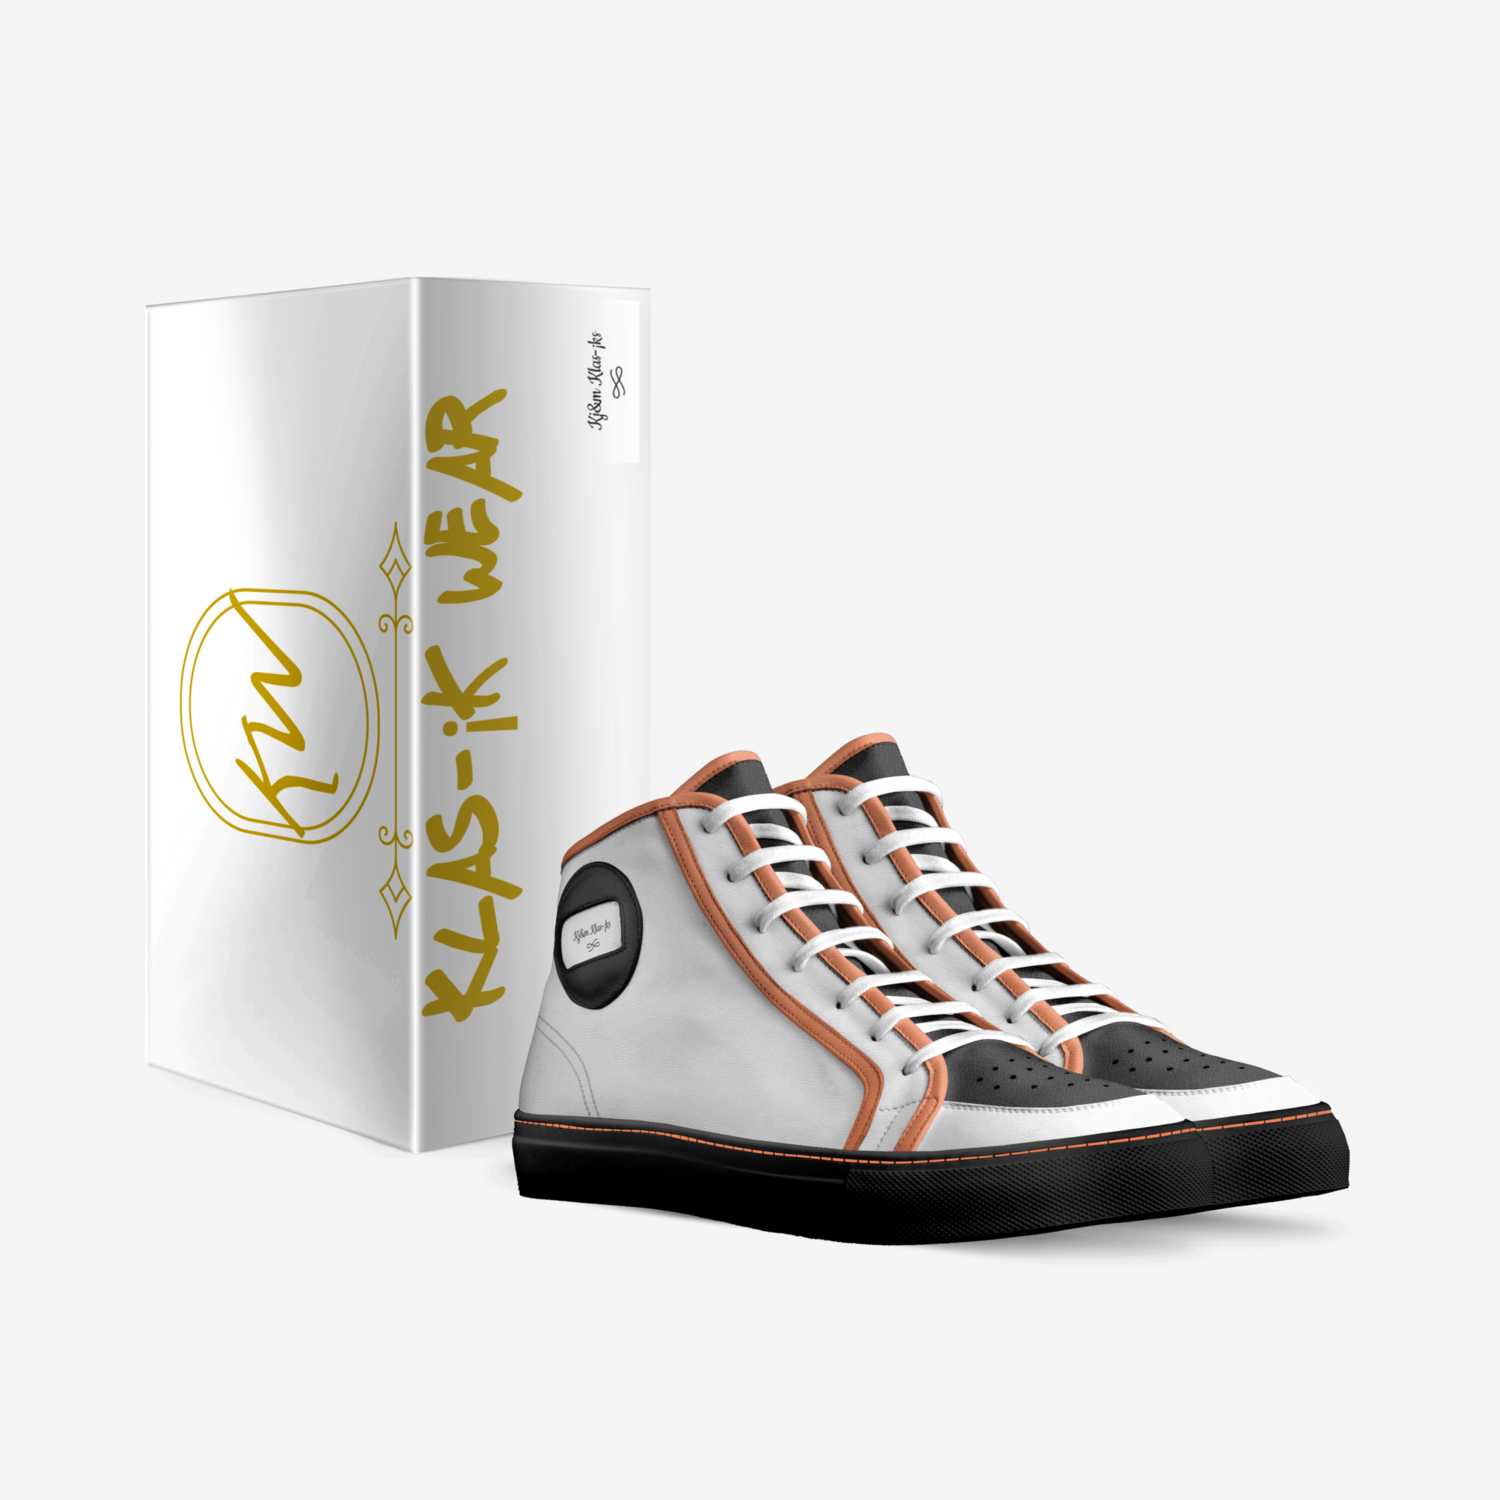 Kj&m Klas-¡ks custom made in Italy shoes by Shaneca Mosby | Box view